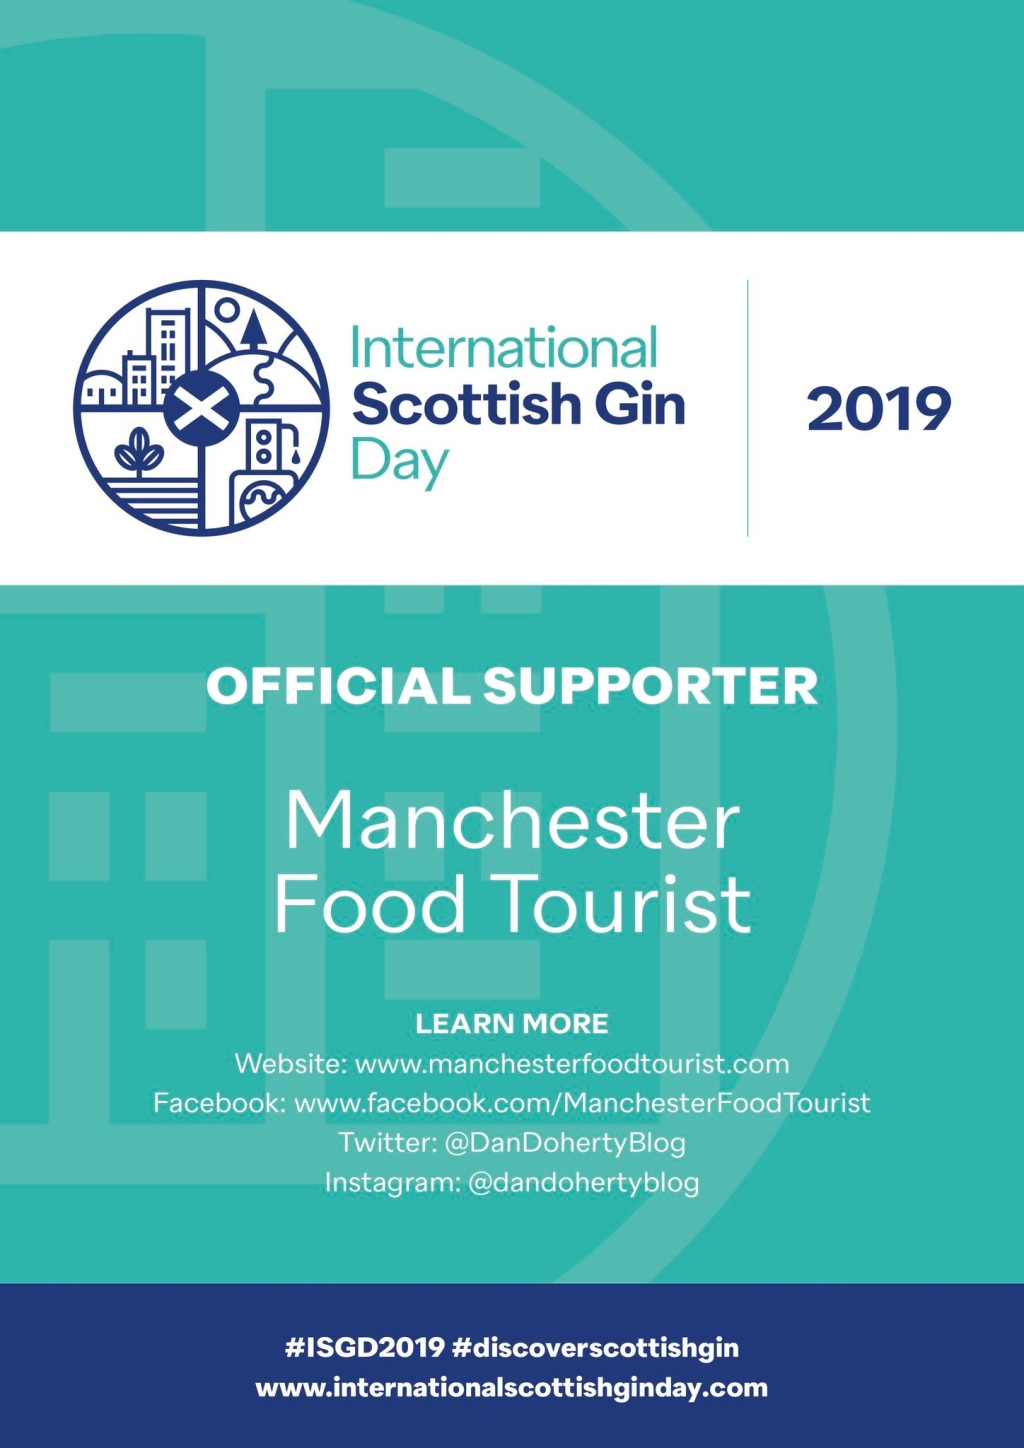 What is ‘International Scottish Gin Day’